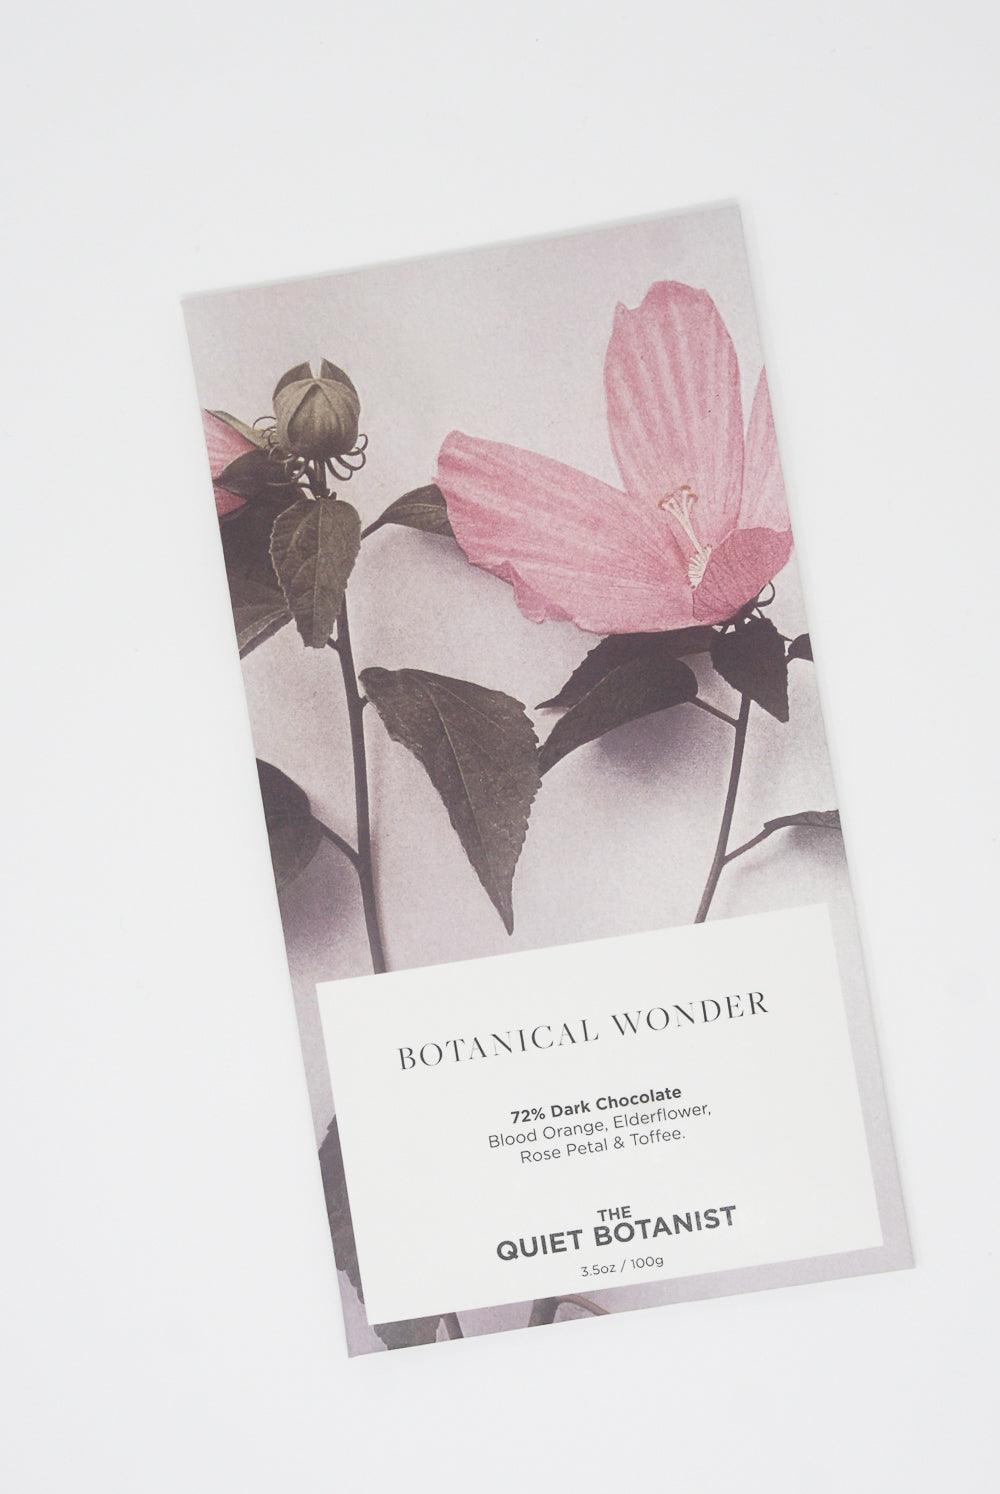 The Quiet Botanist - Botanical Wonder Bar botanical wrapper